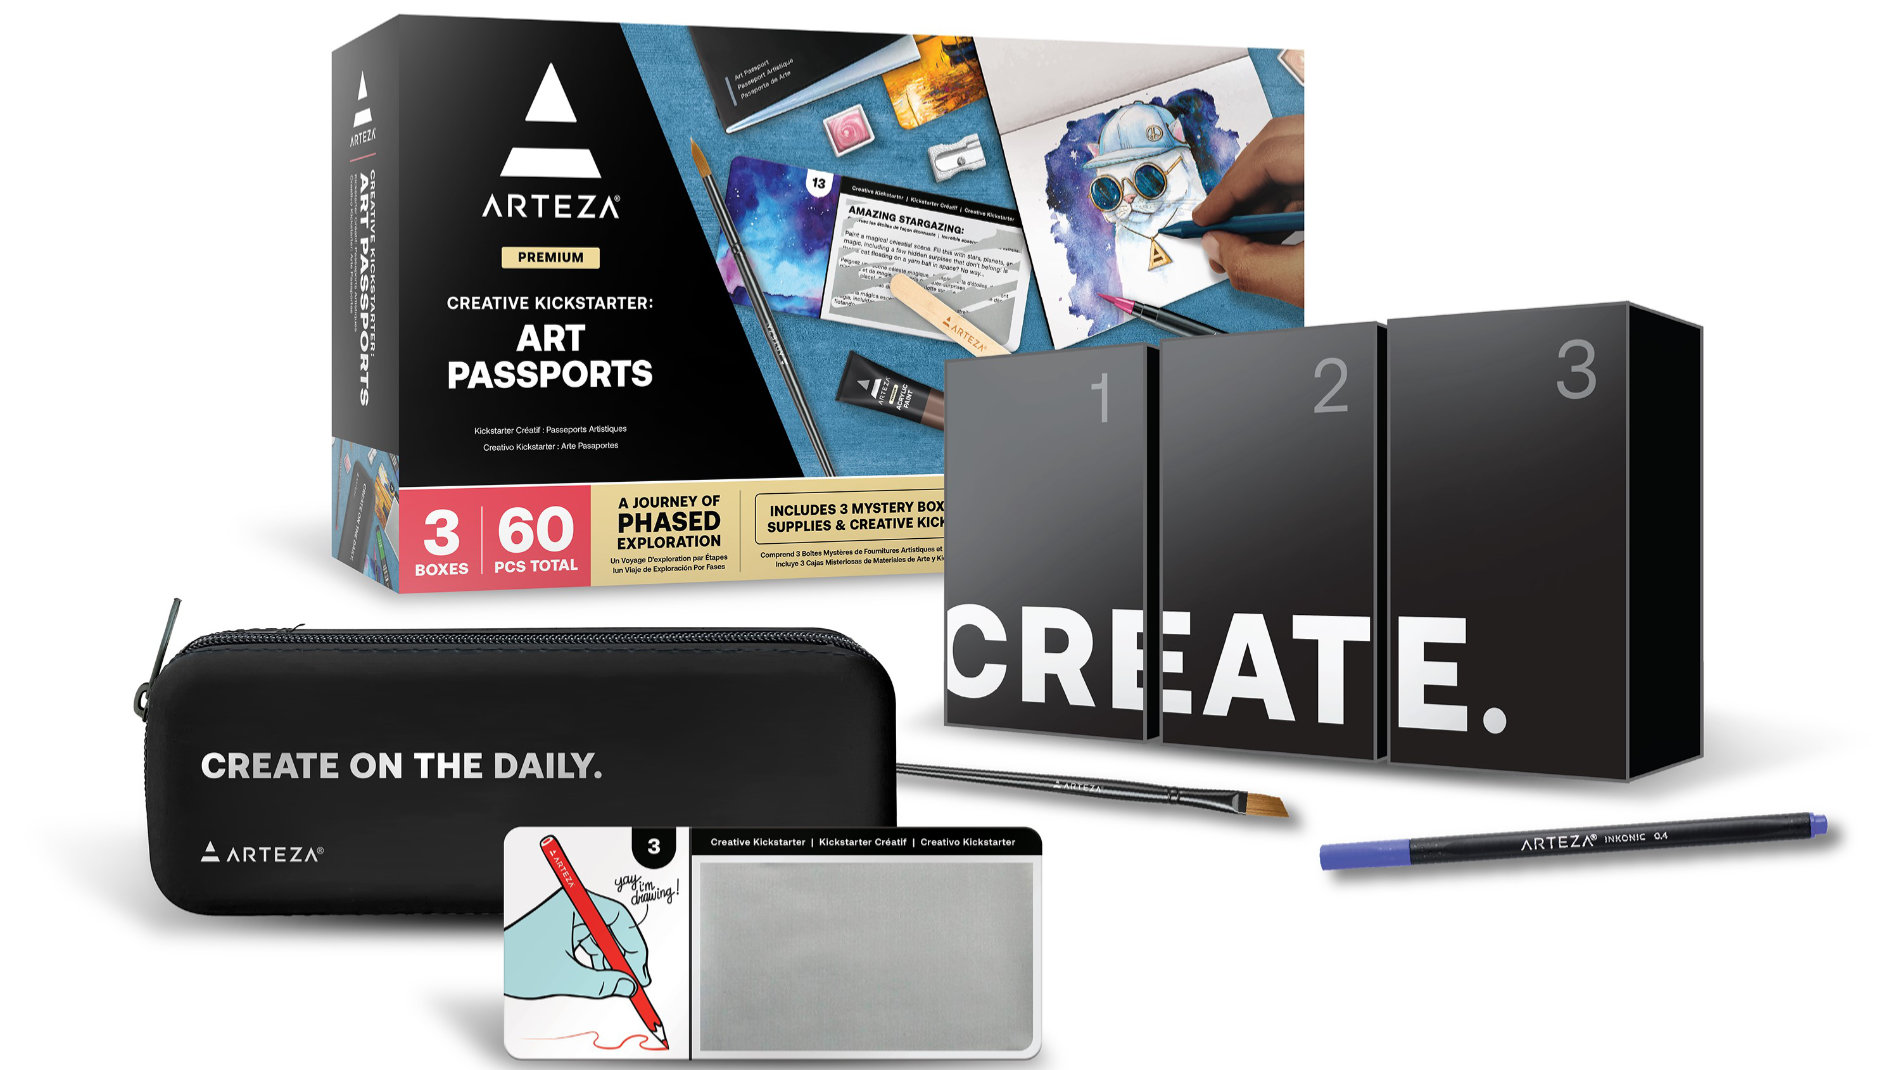 Arteza – Arteza Creative Kickstarter: Art Passports